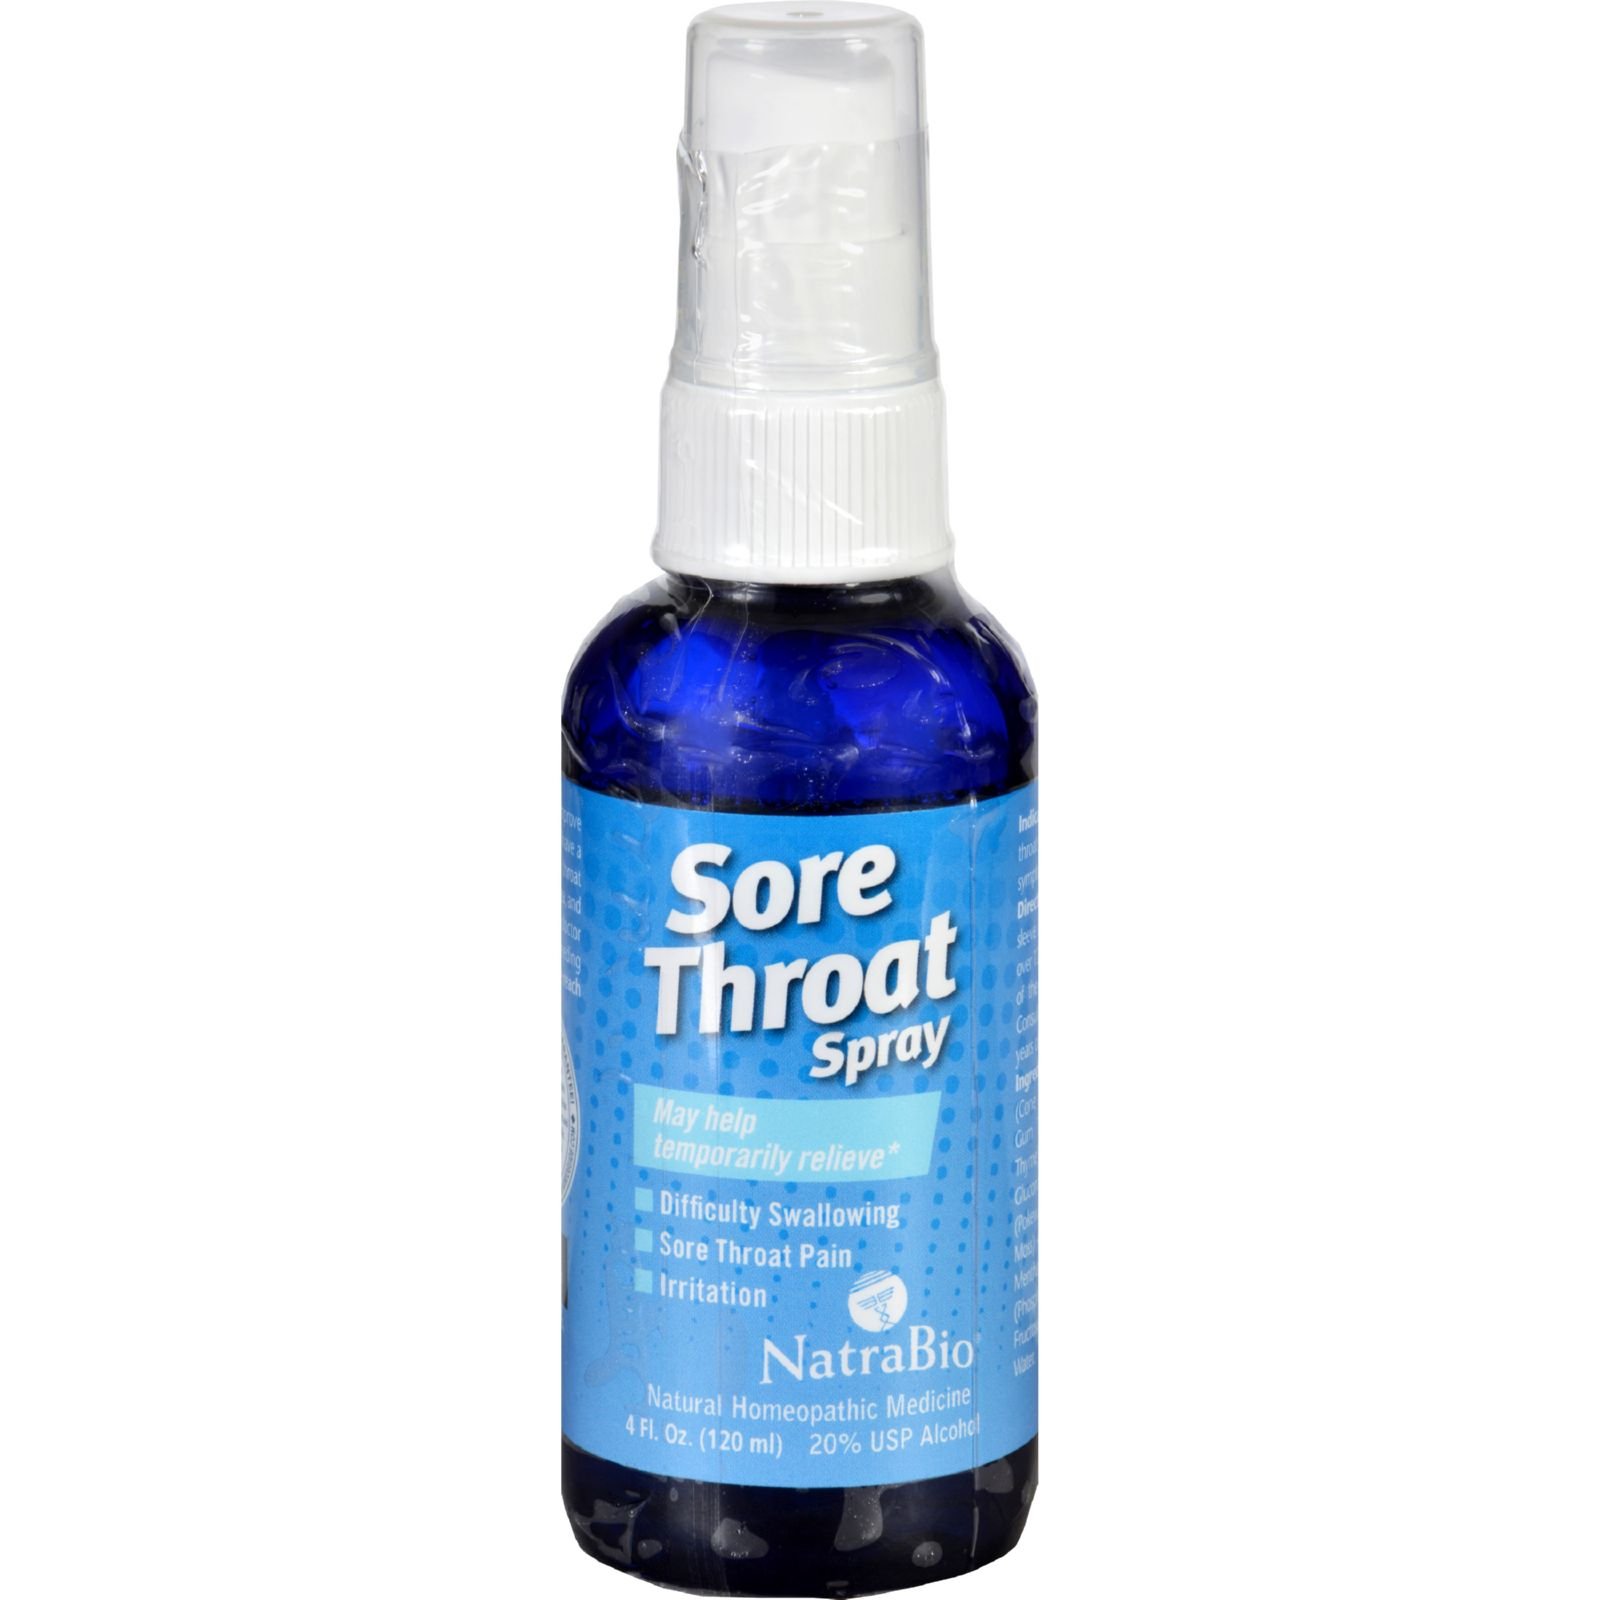 Natra-Bio Sore Throat Spray - Mint